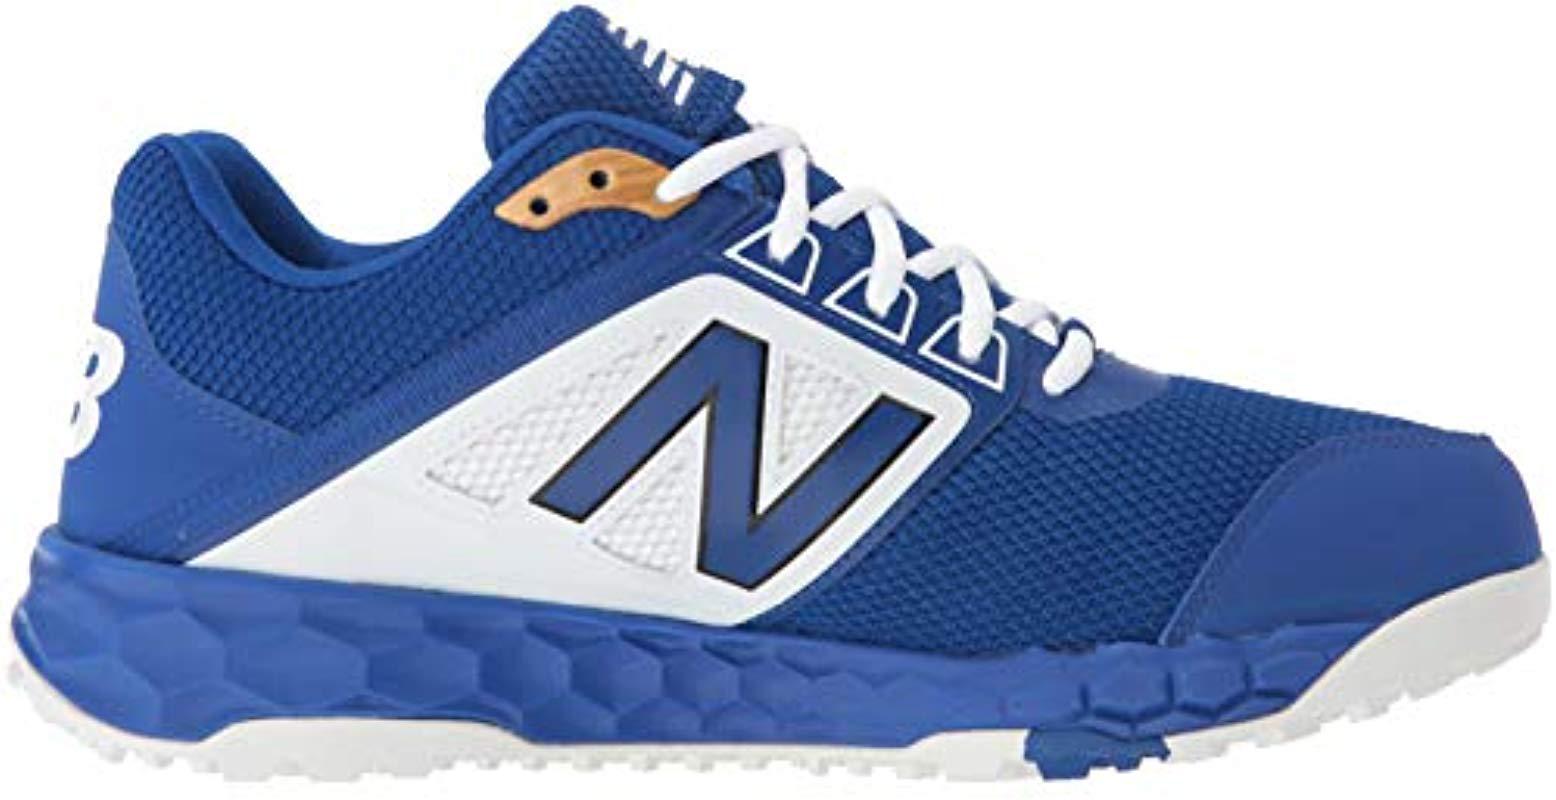 New Balance Rubber 3000v4 Turf Baseball Shoe in Blue for Men - Save 12% ...